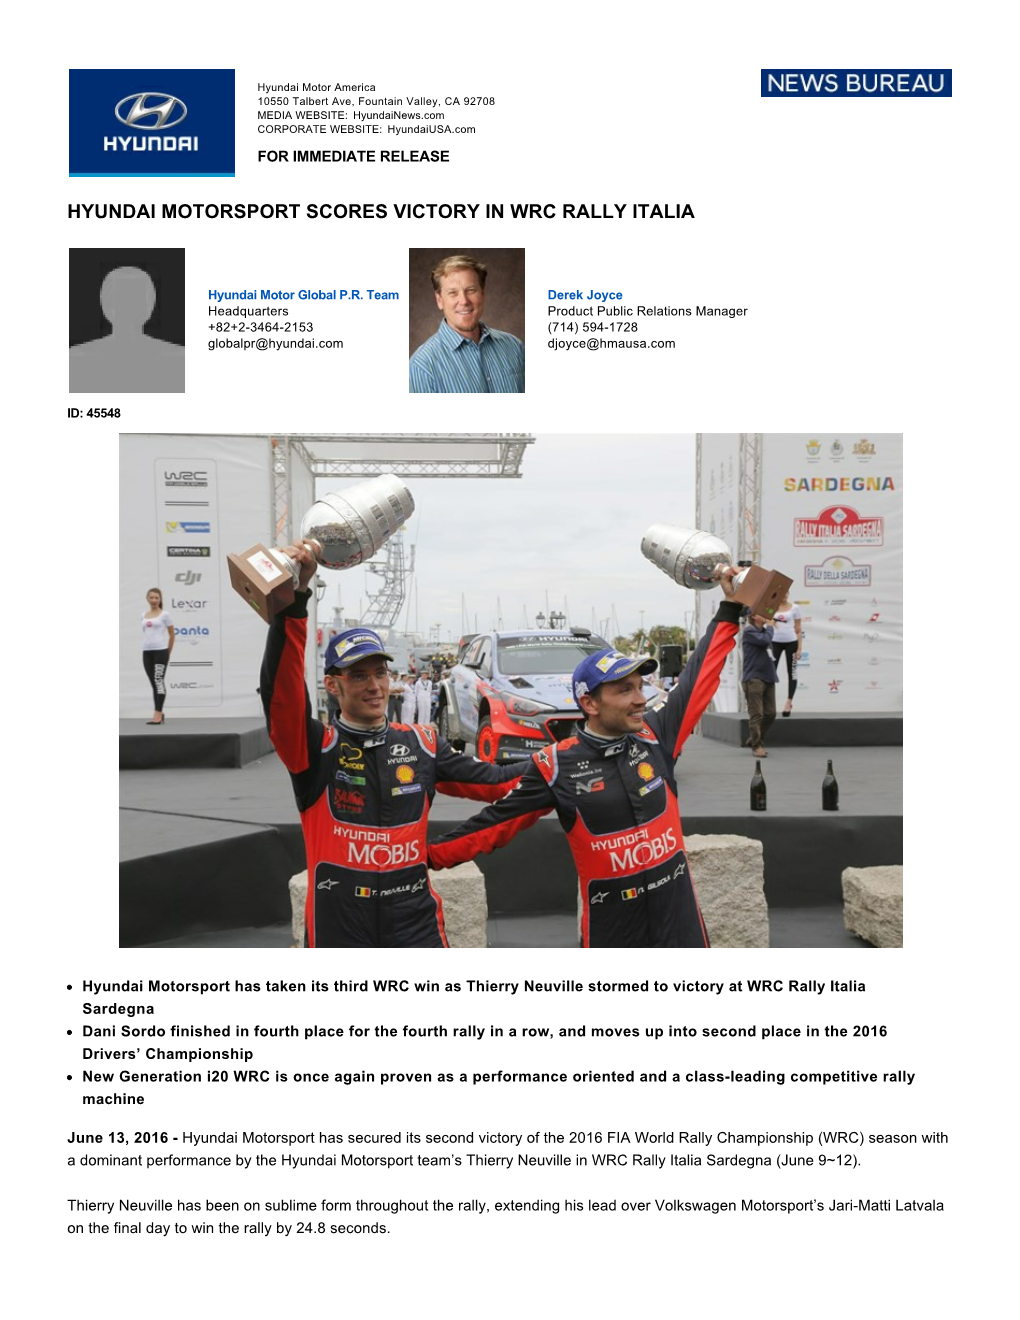 Hyundai Motorsport Scores Victory in Wrc Rally Italia